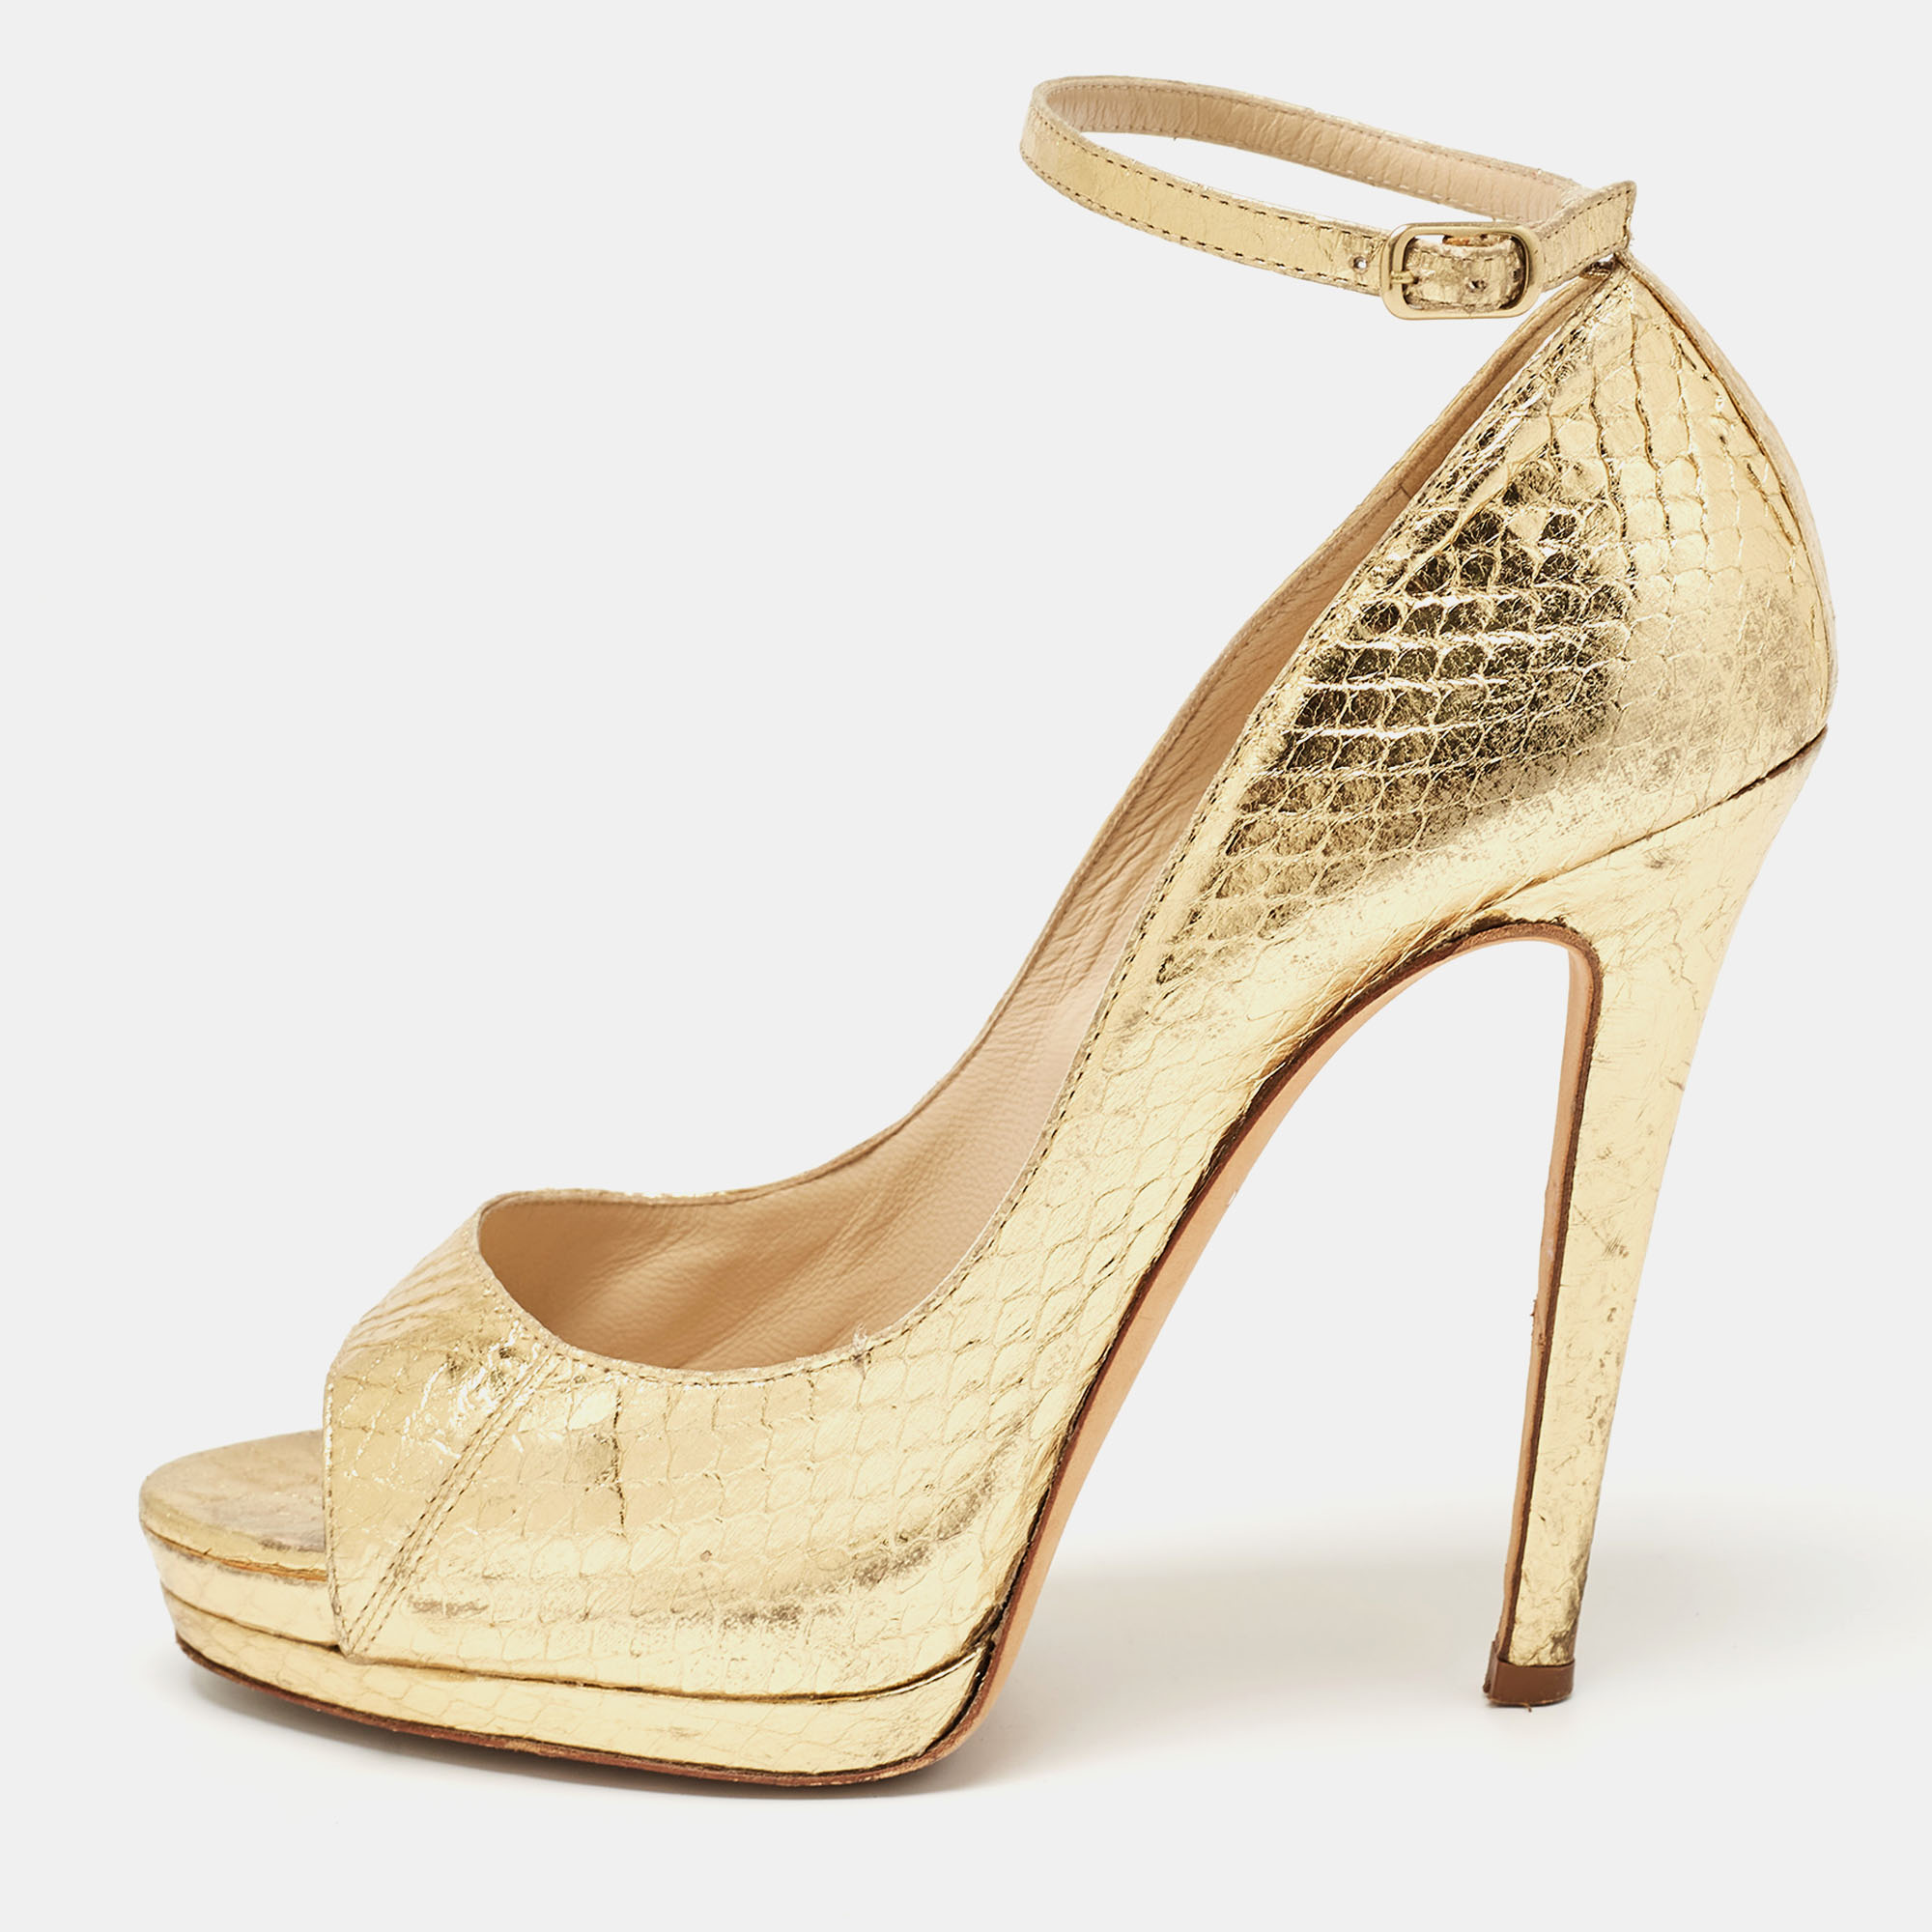 Pre-owned Oscar De La Renta Metallic Gold Python Embossed Peep Toe Ankle Strap Pumps Size 37.5